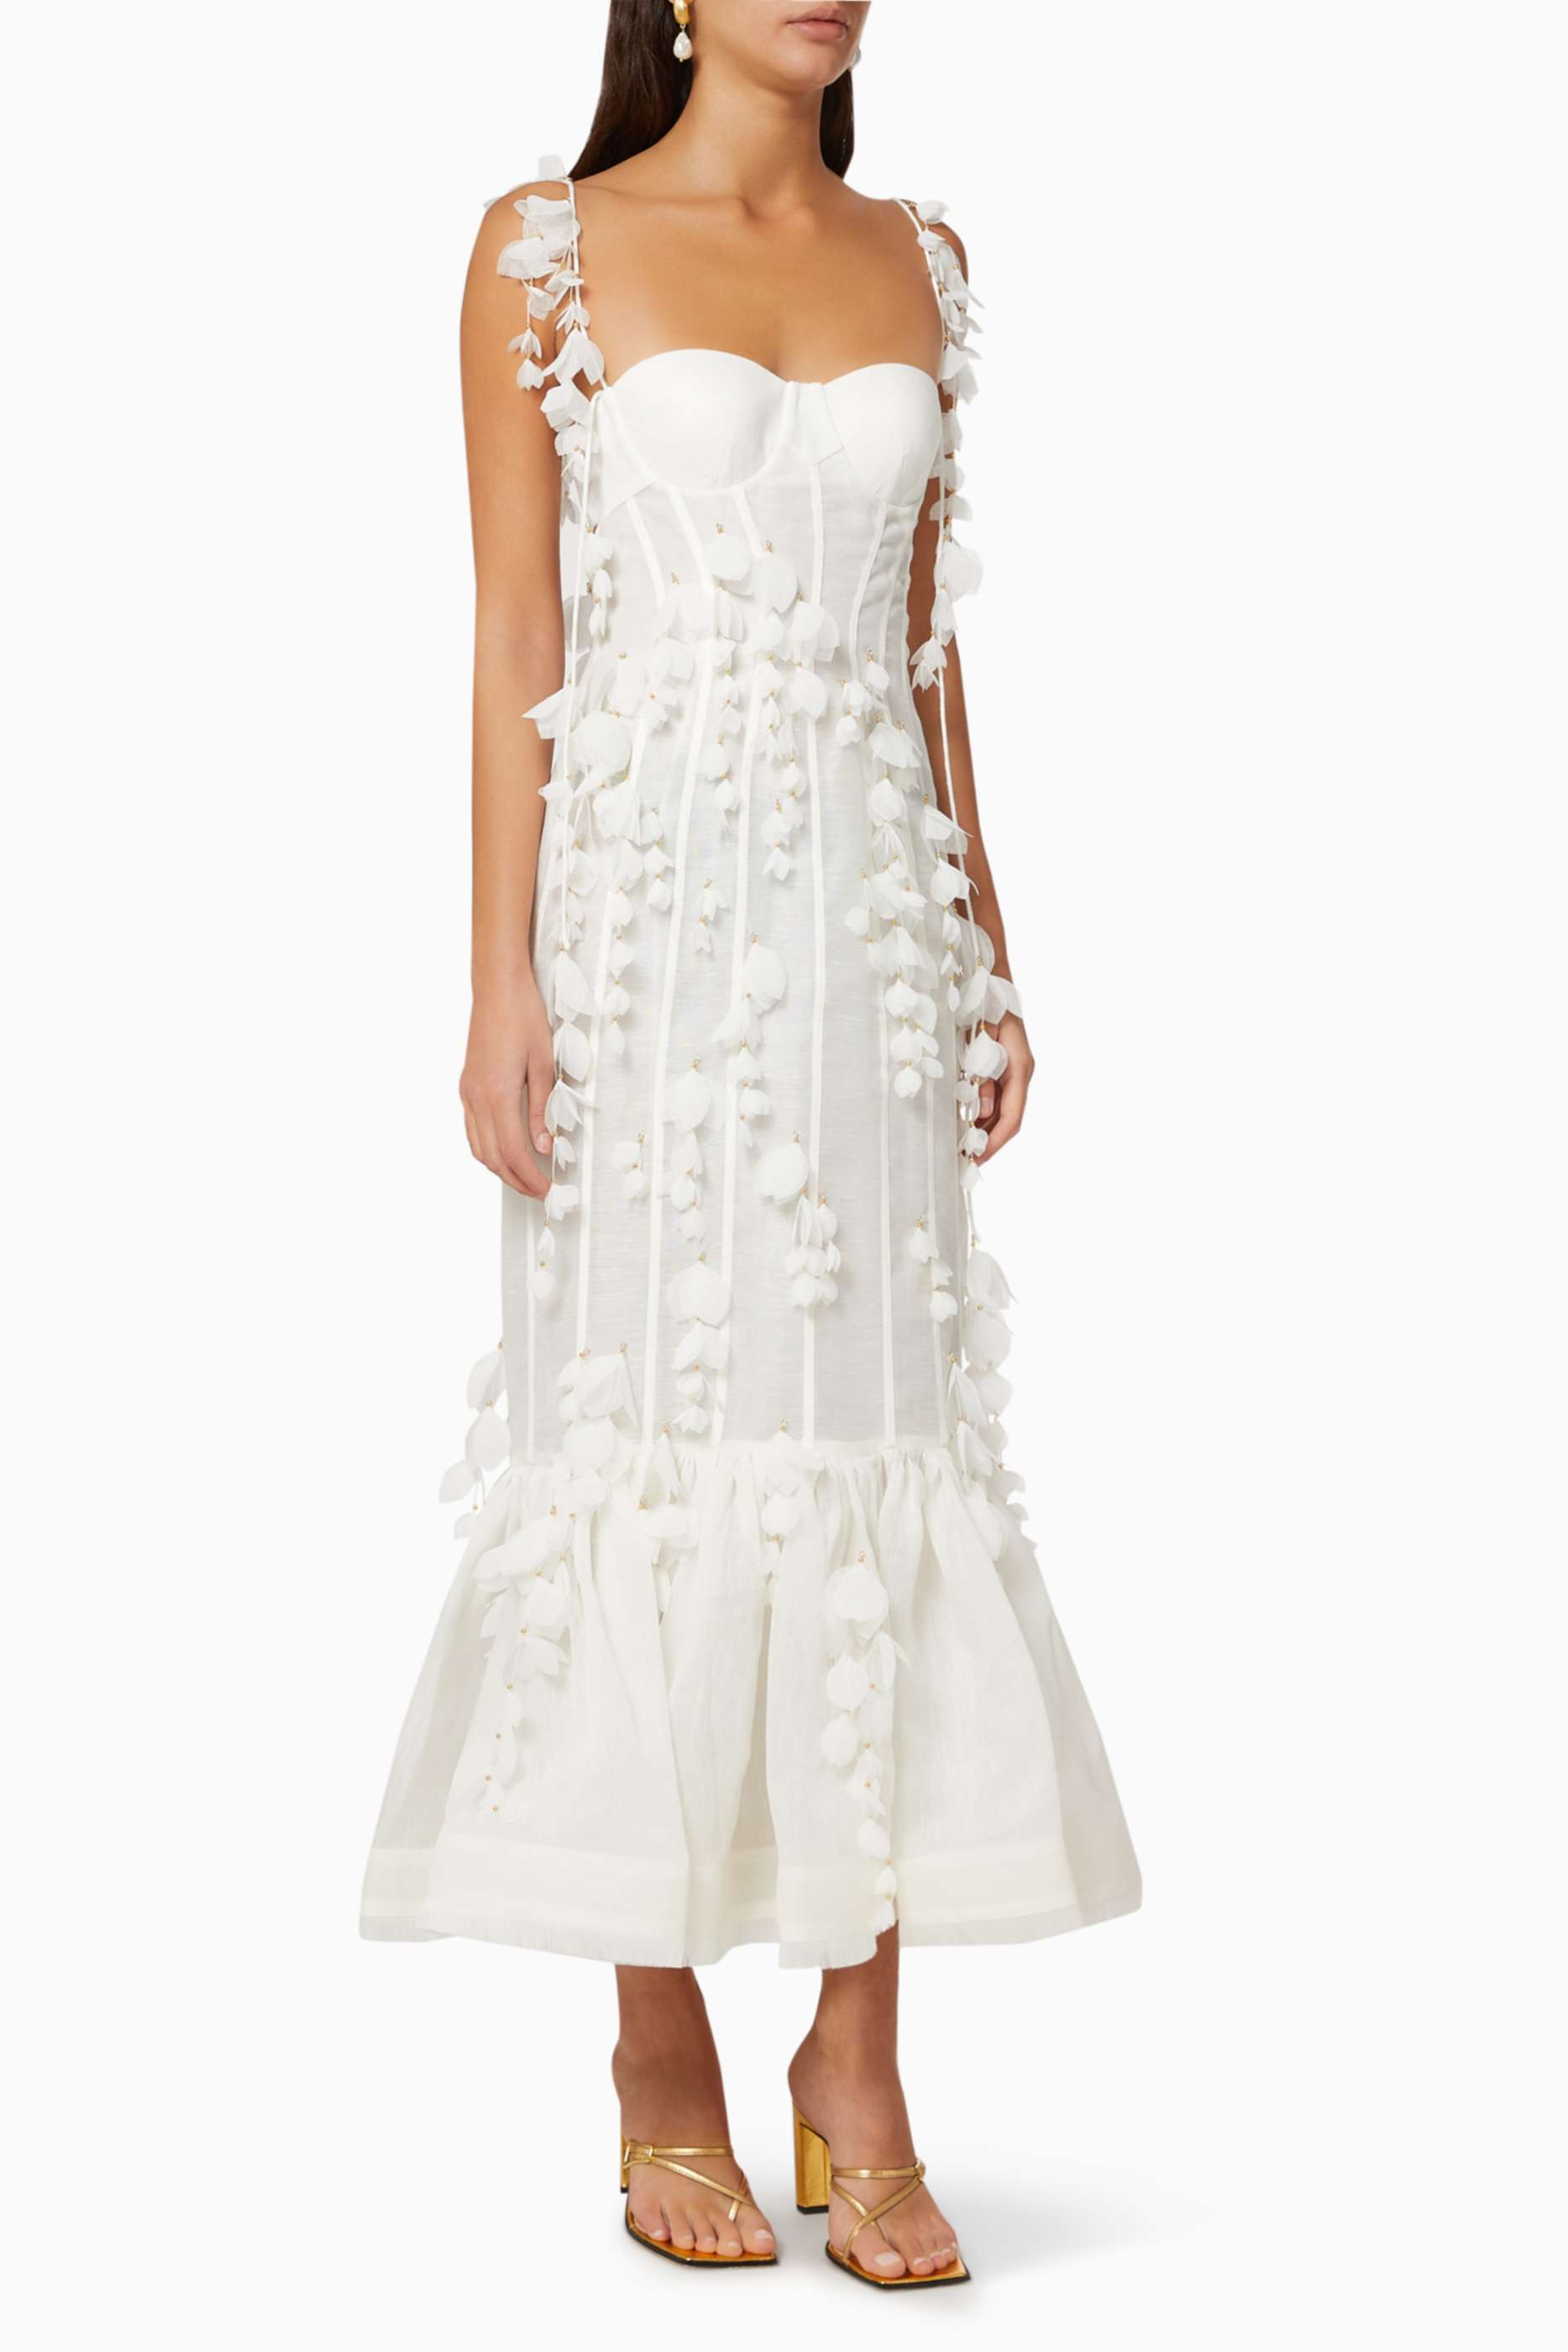 Zimmermann Botanica White Dress